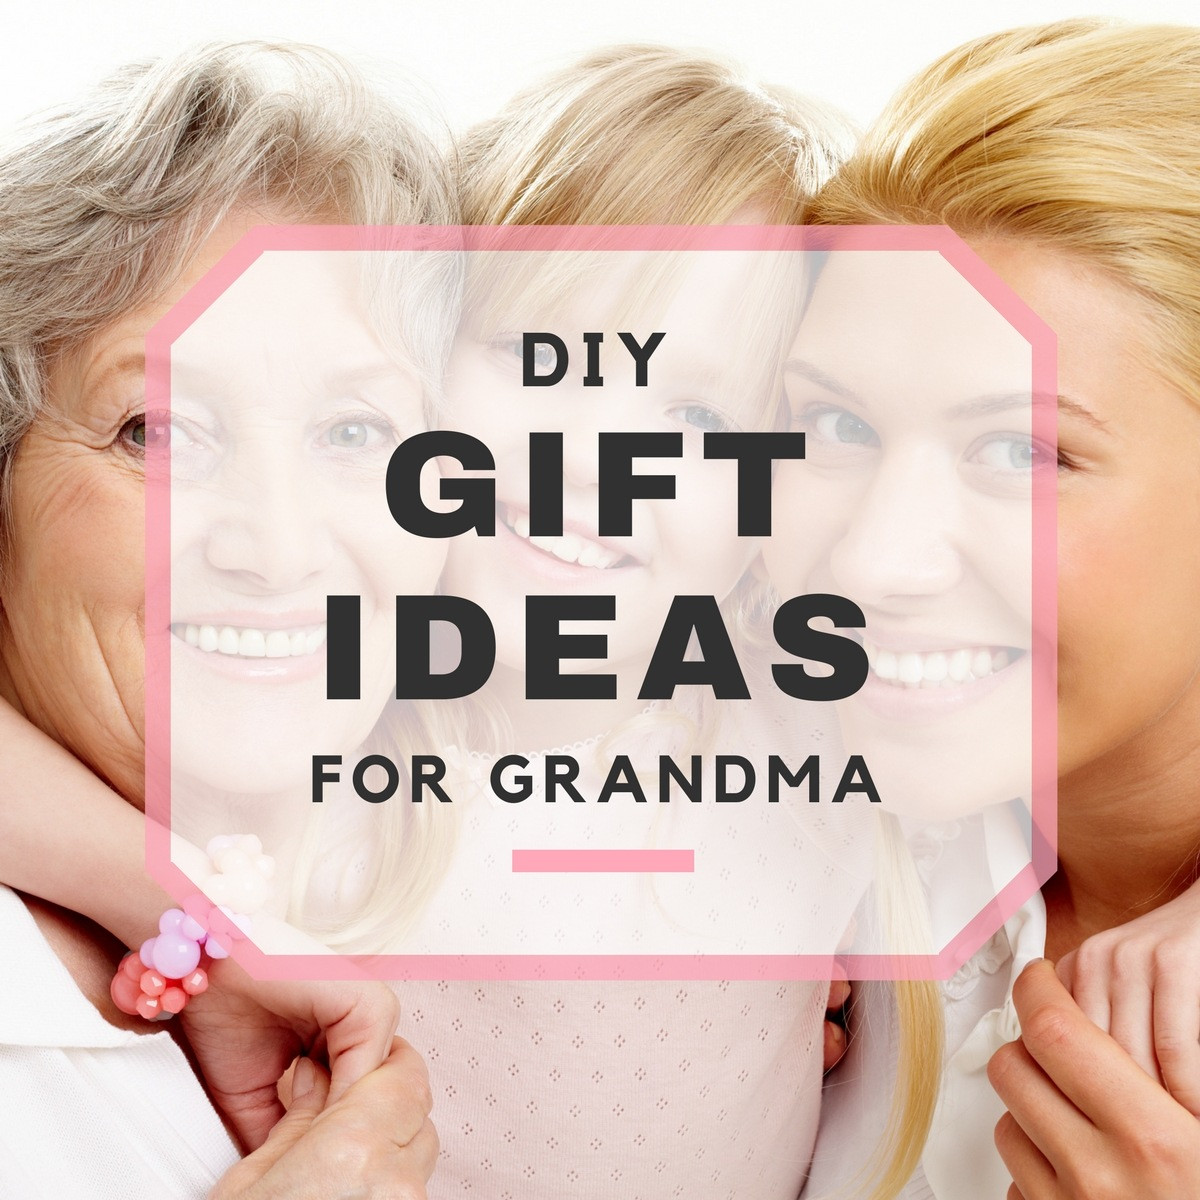 DIY Gift Ideas For Grandma
 DIY Gift Ideas for Grandma